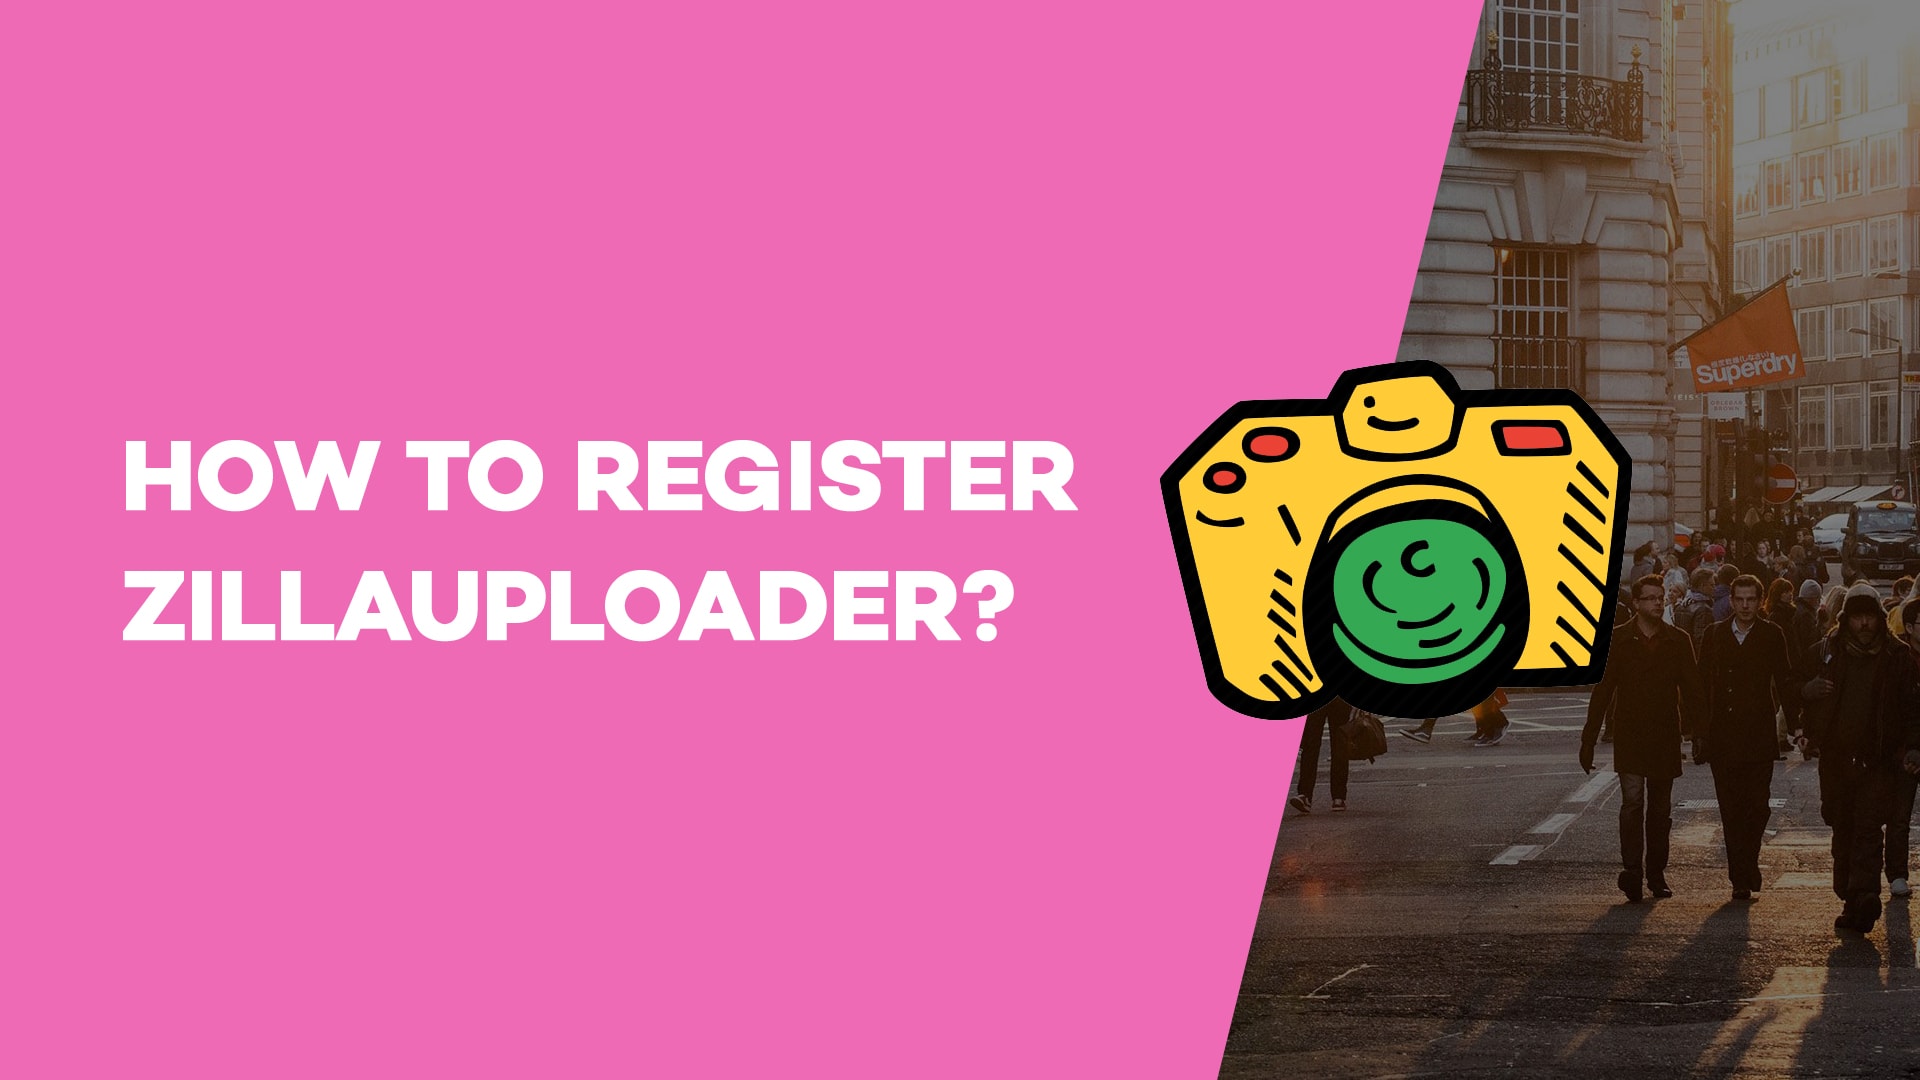 How to register Zillauploader?